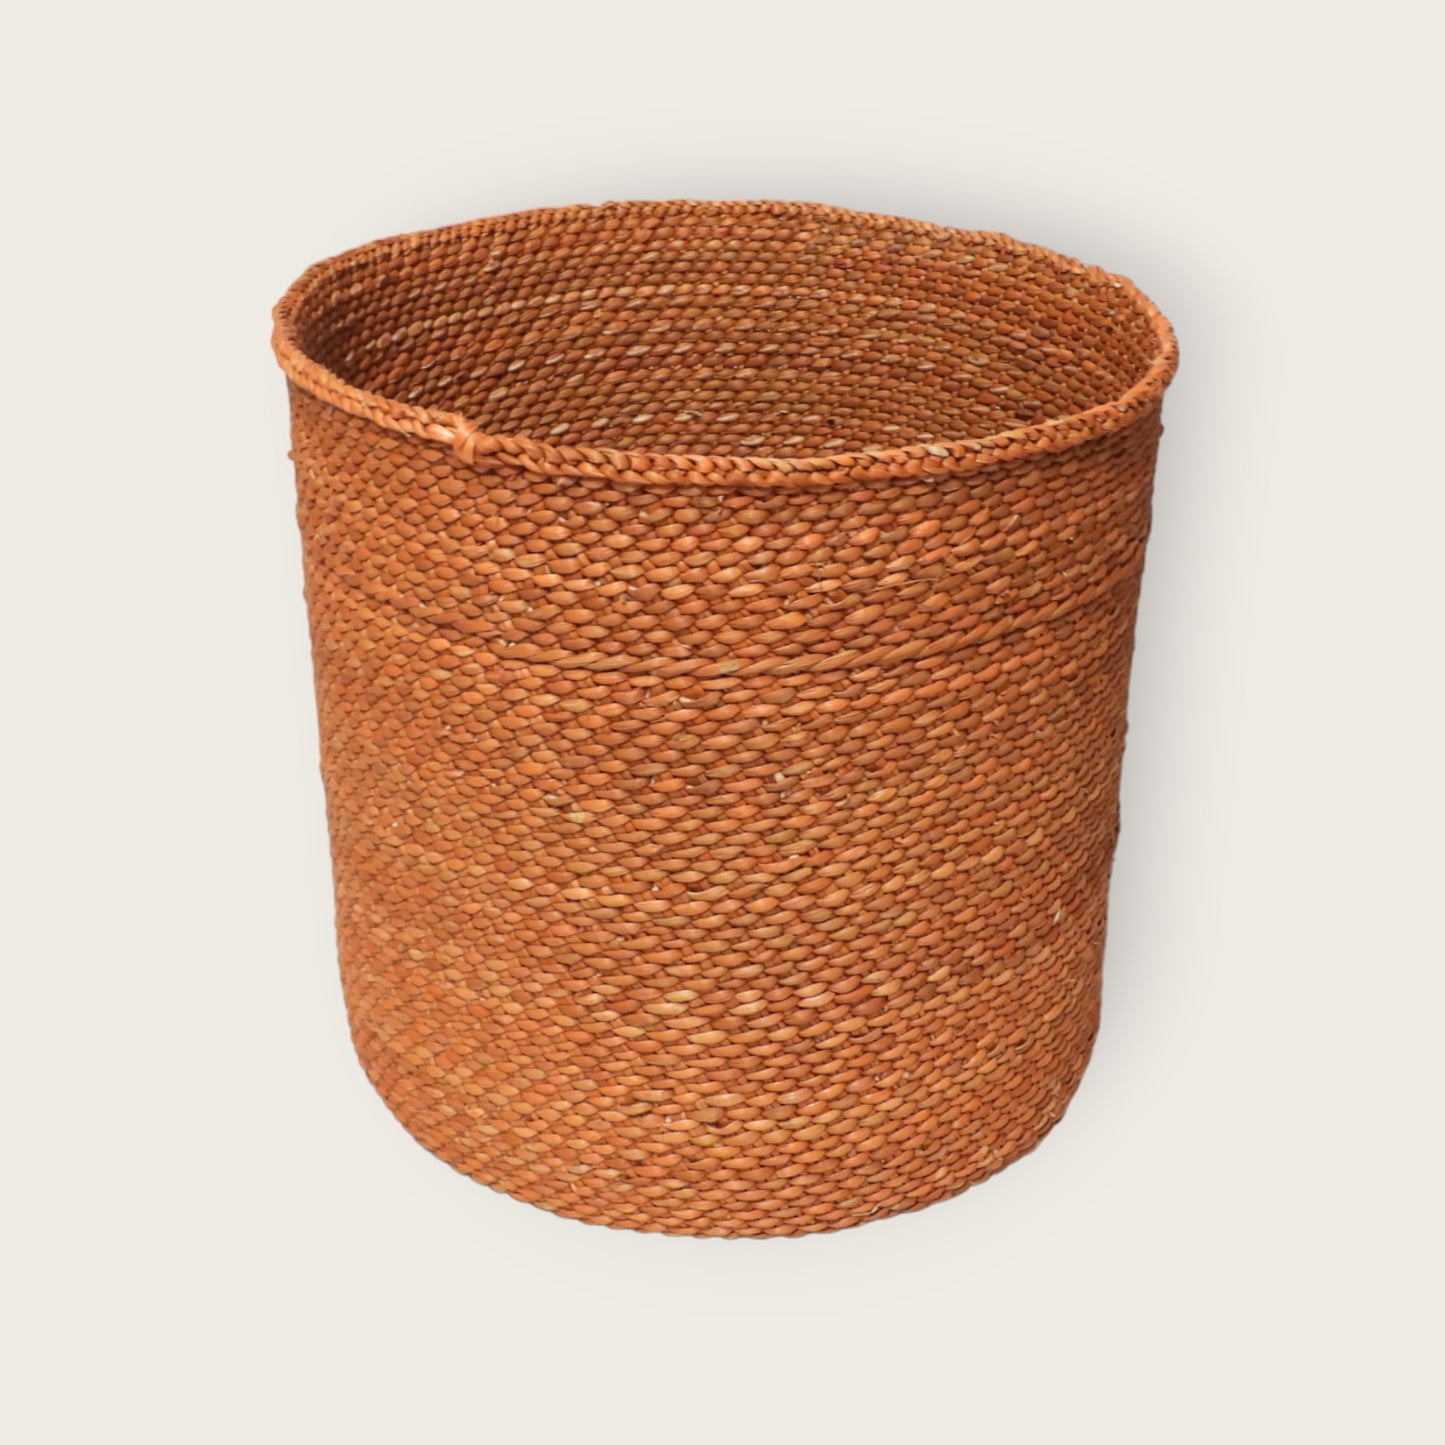 IRINGA Basket - Rust